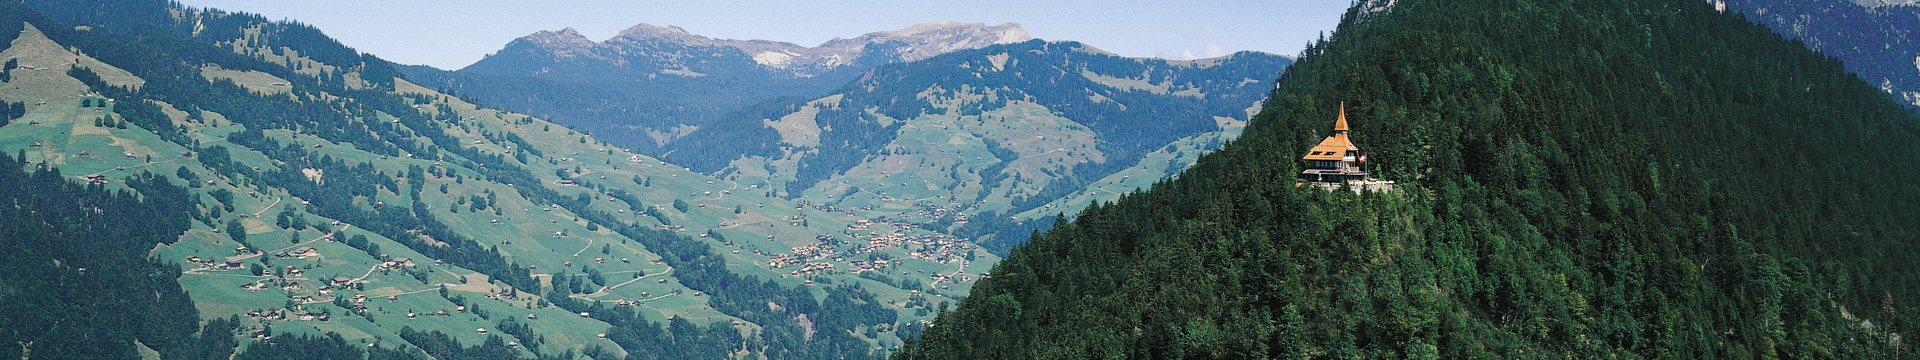 Berner-Oberland